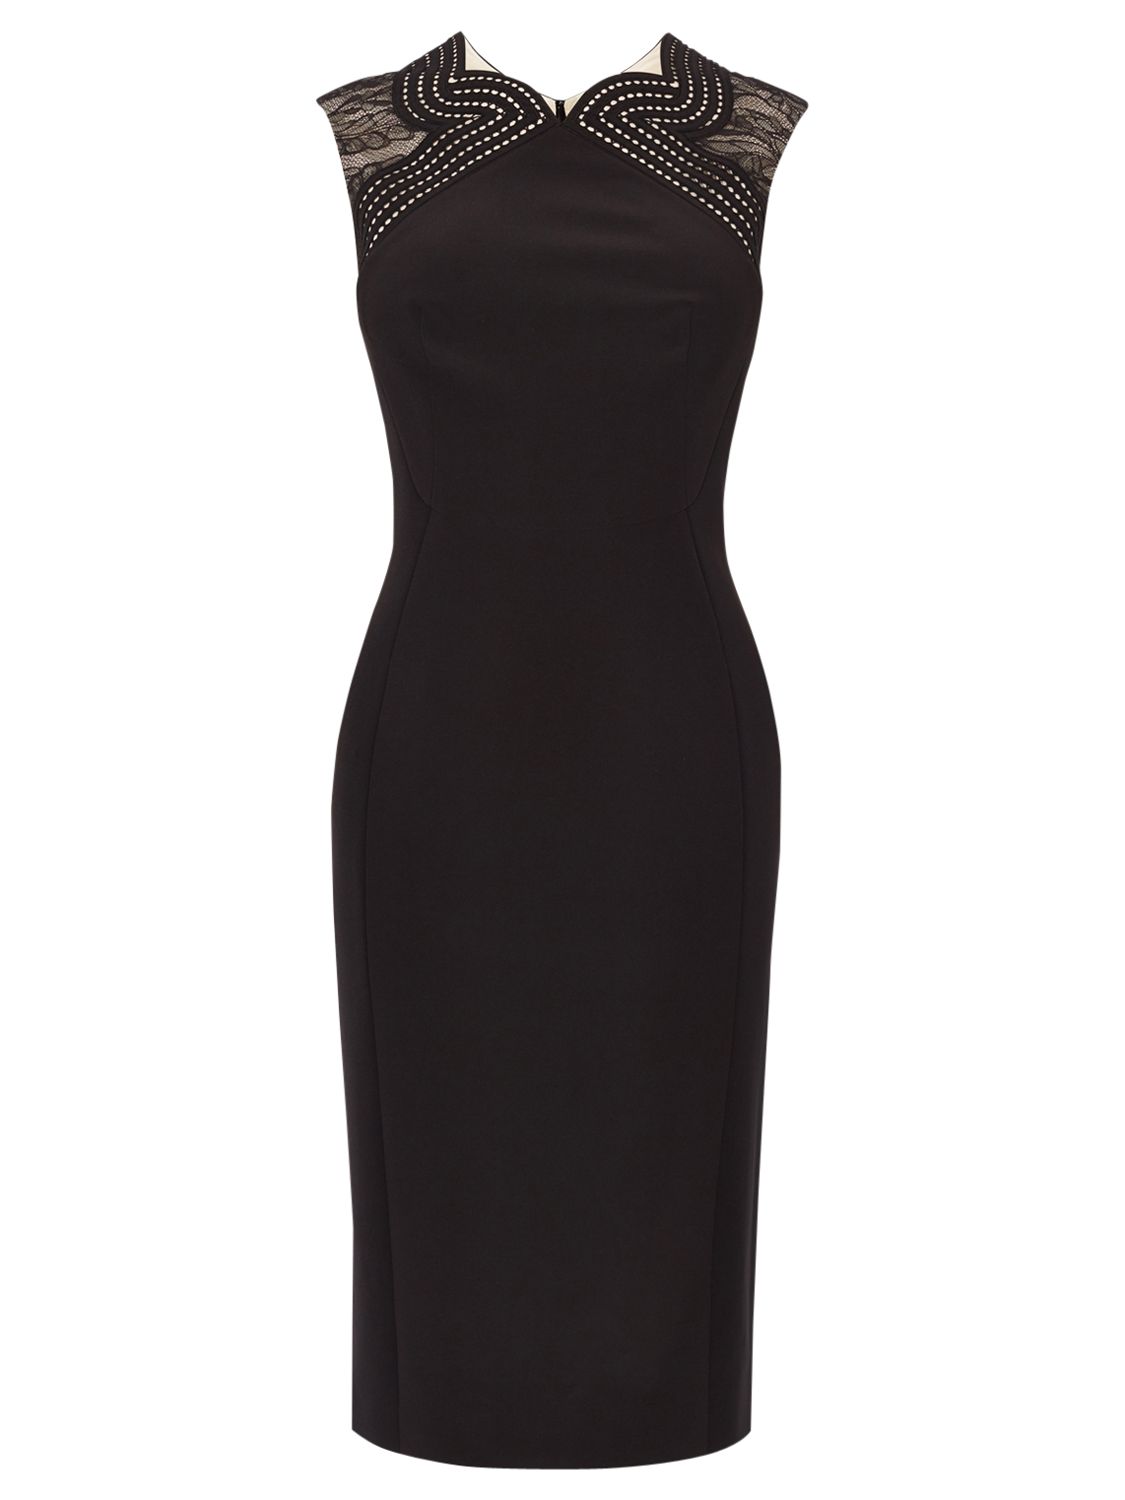 Karen Millen Panelled Lace Dress, Black